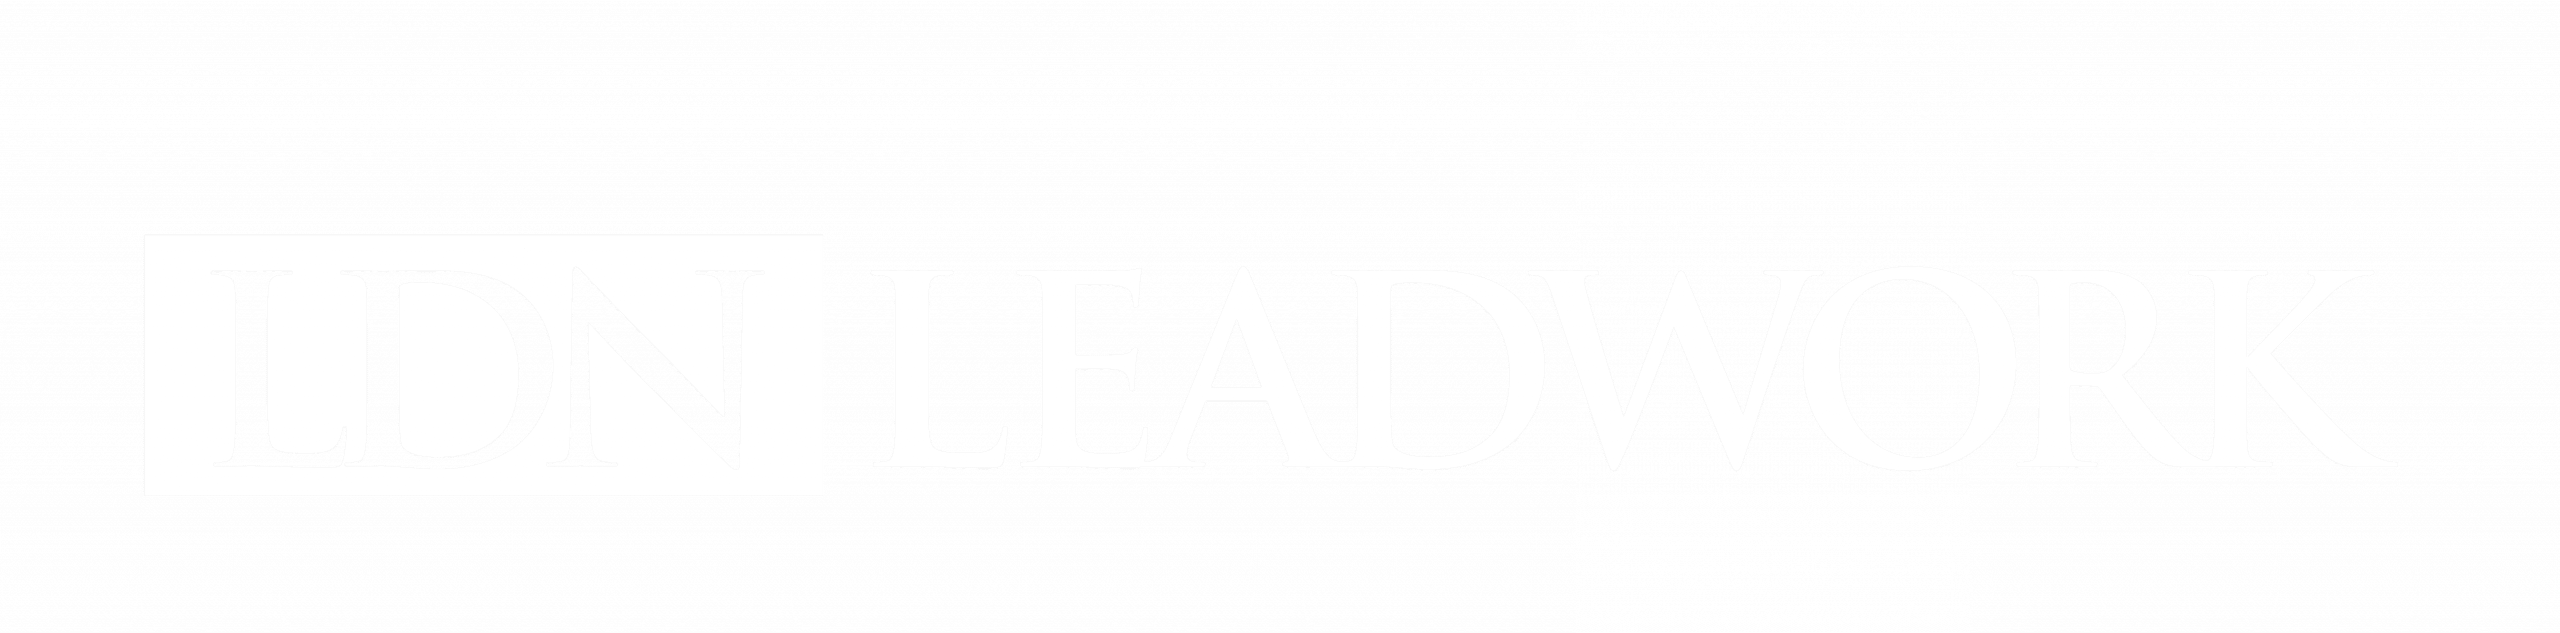 LDN-LEADWORK-Logo-Transparent